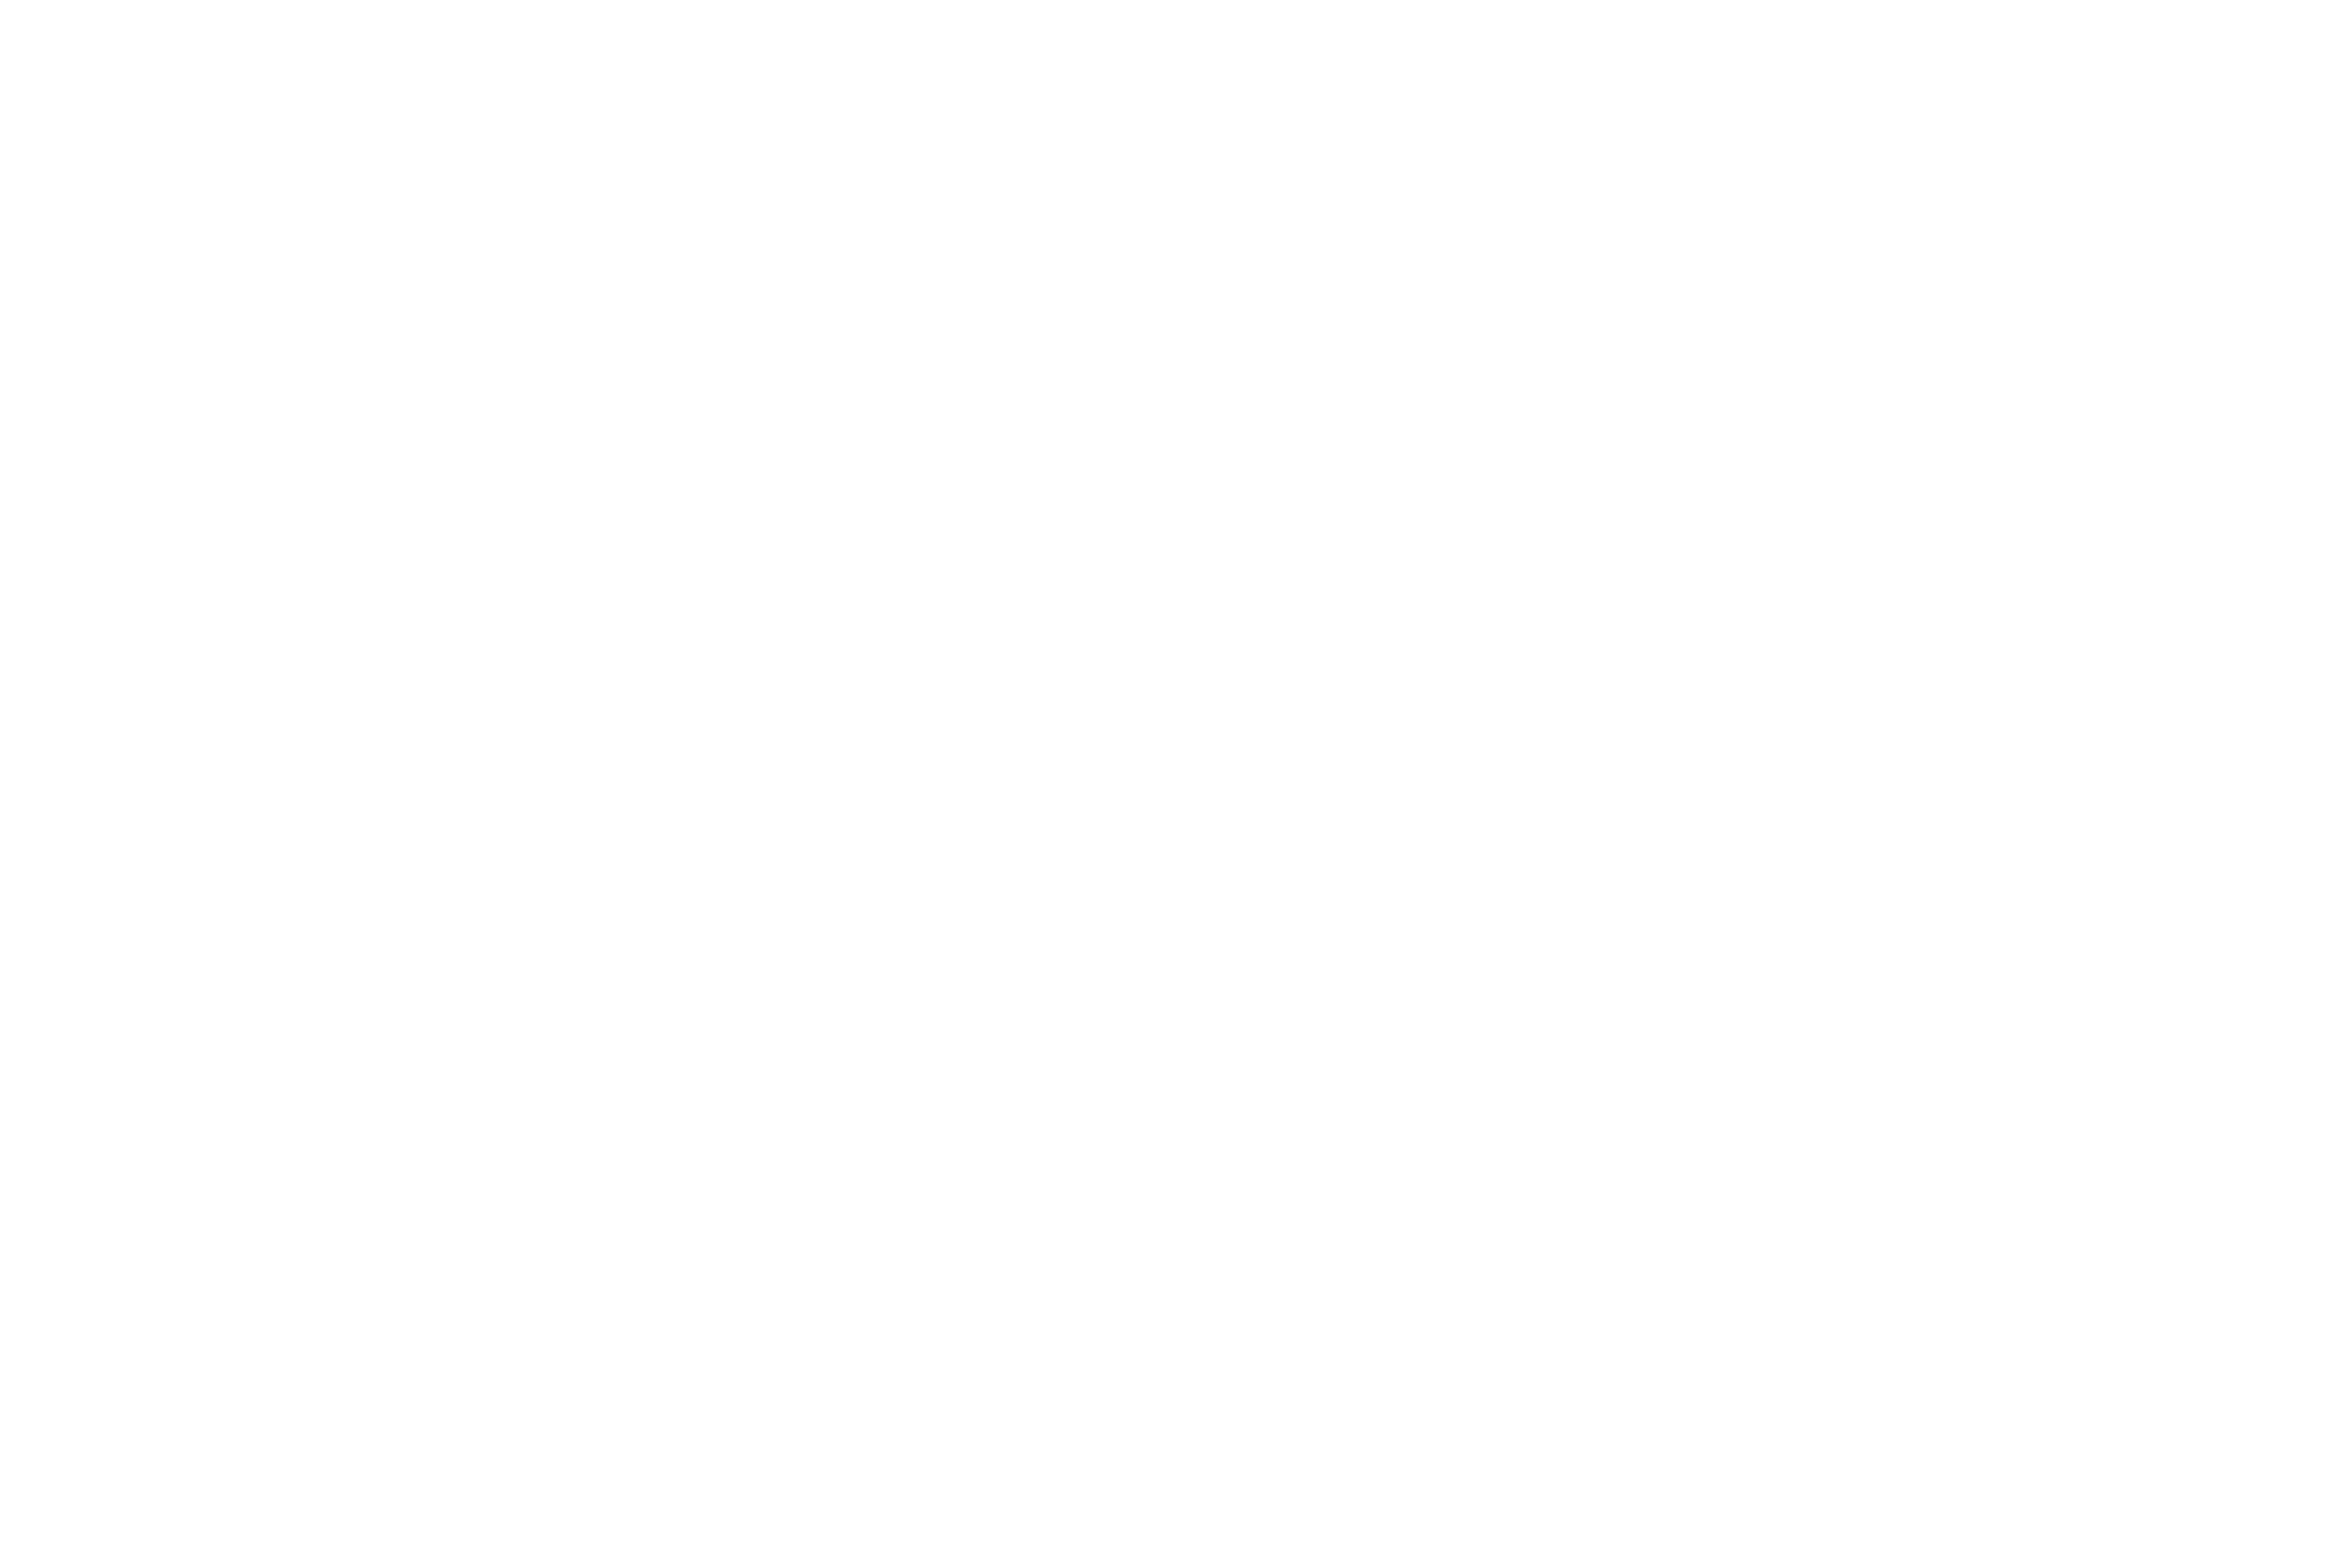 Over 20 years making beautiful branded eyewear